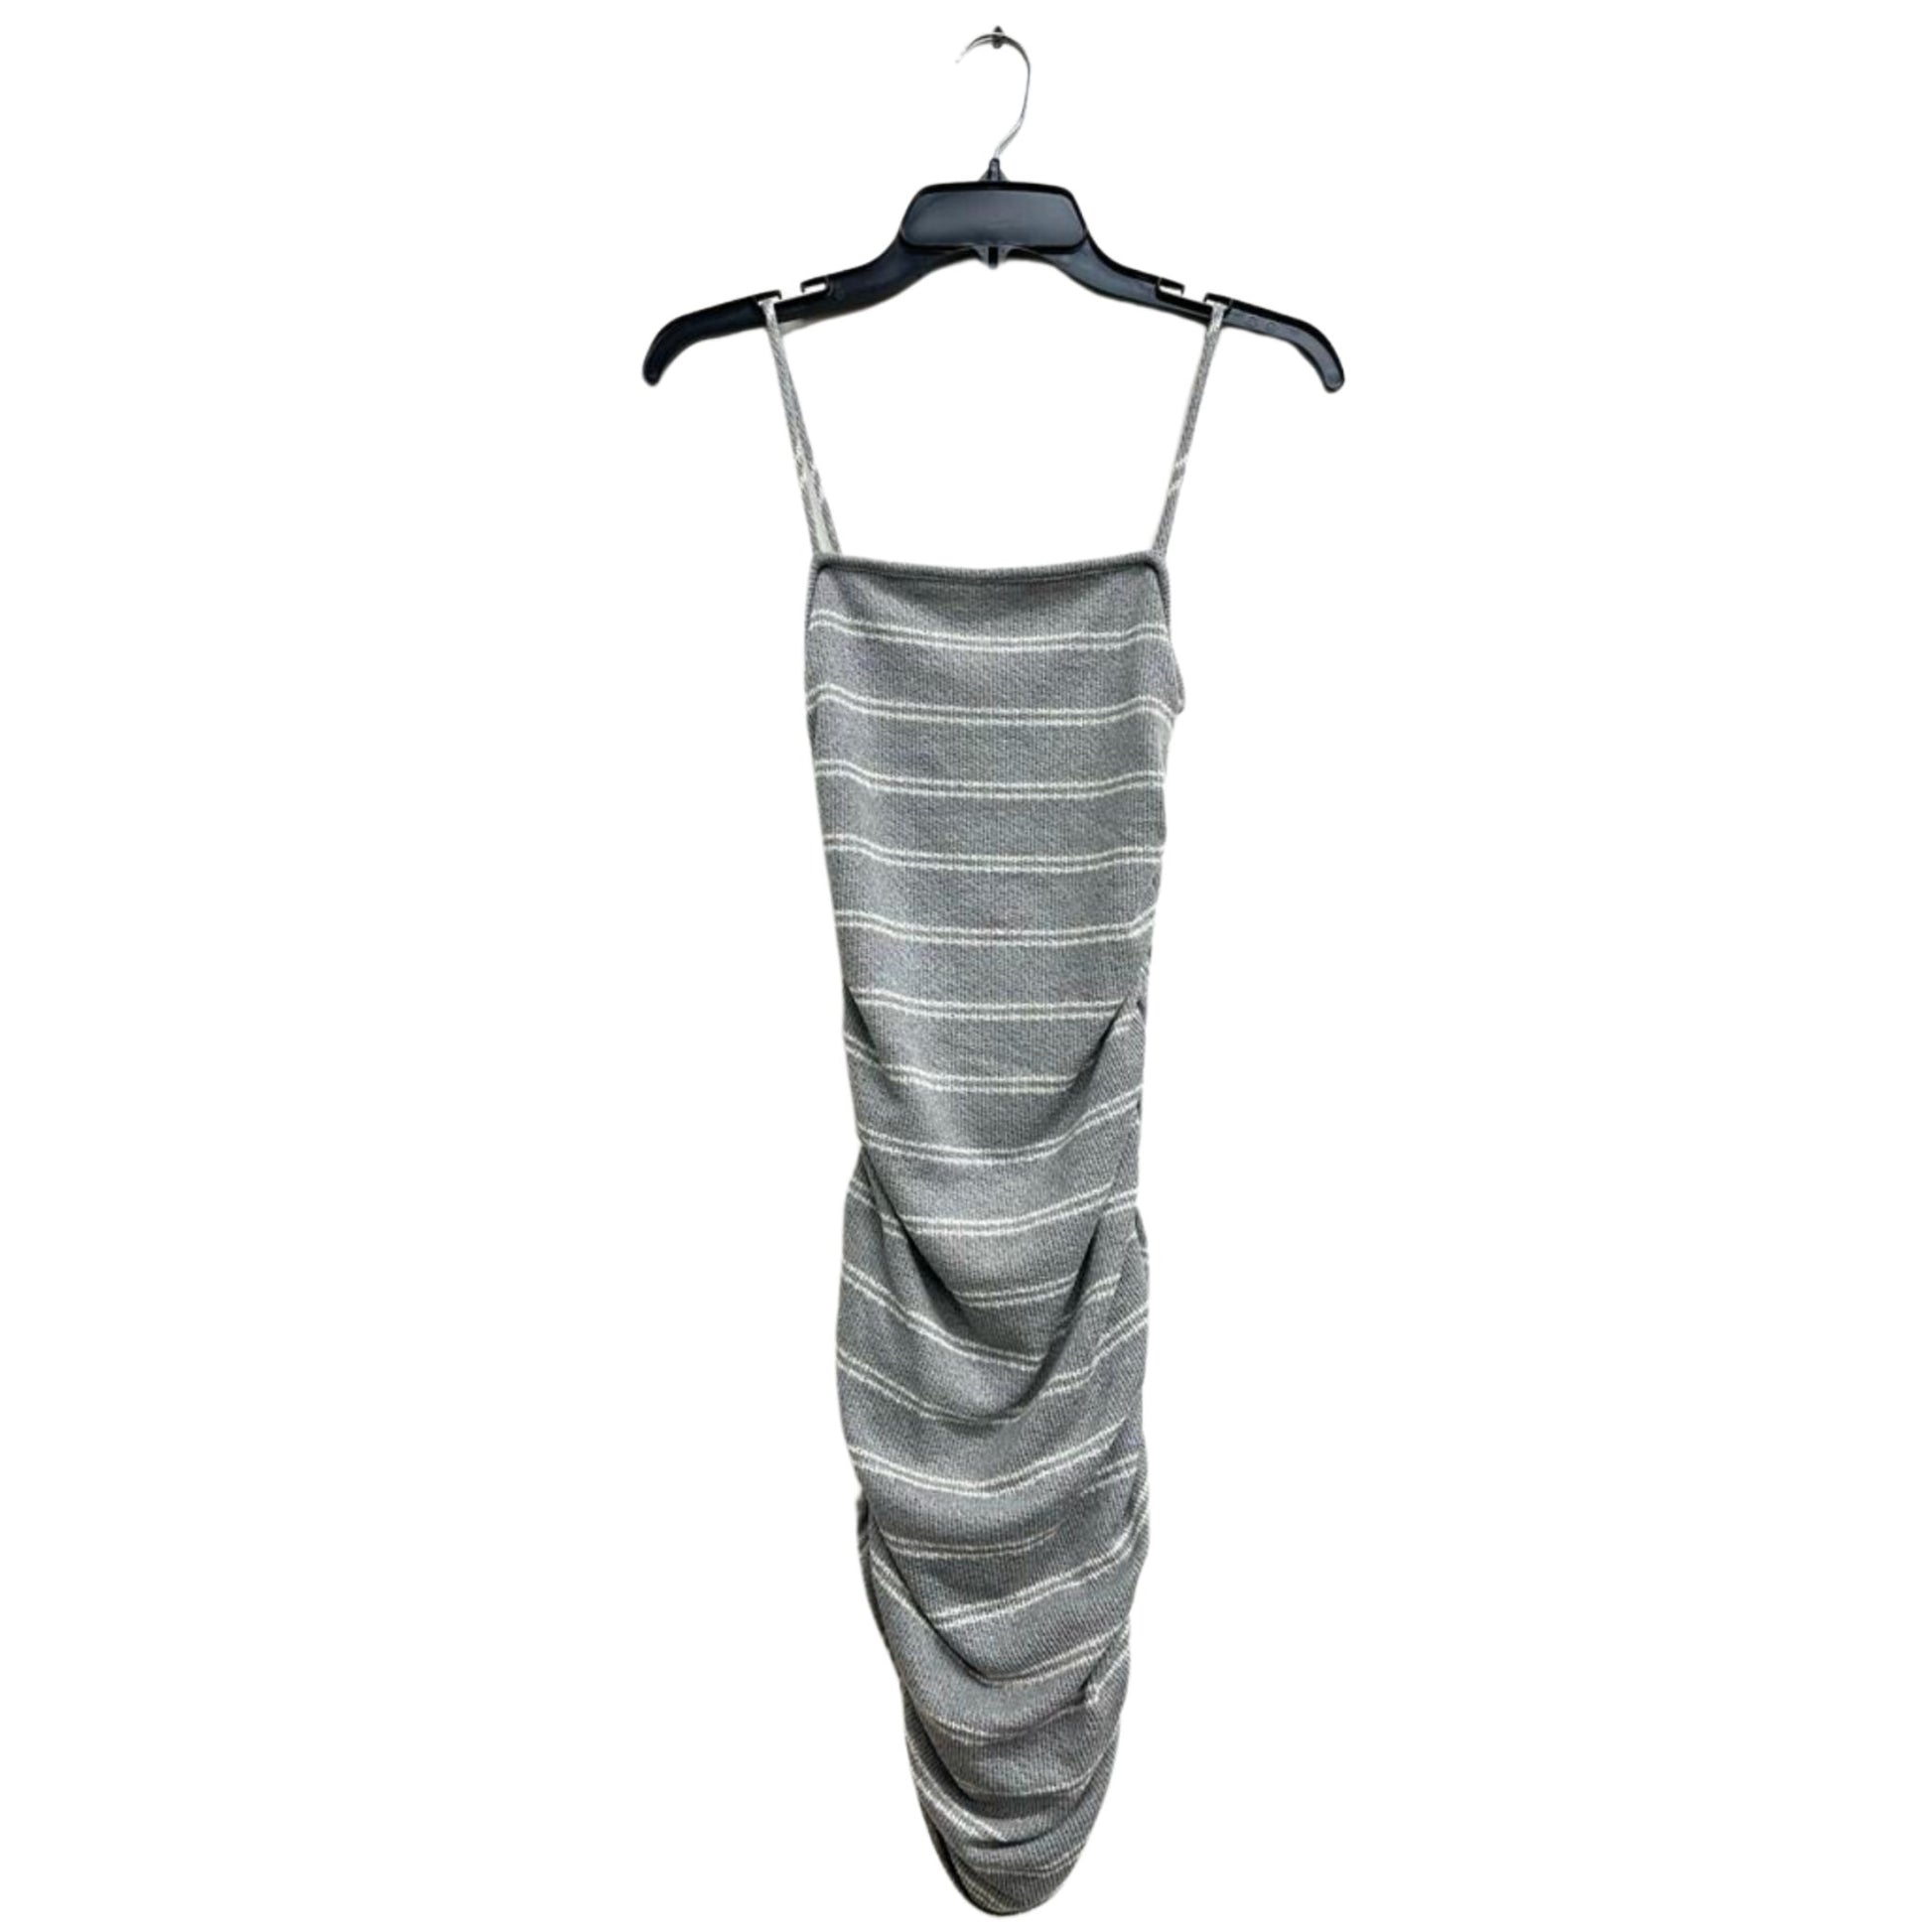 Stripped dress - Lavish life LLC 